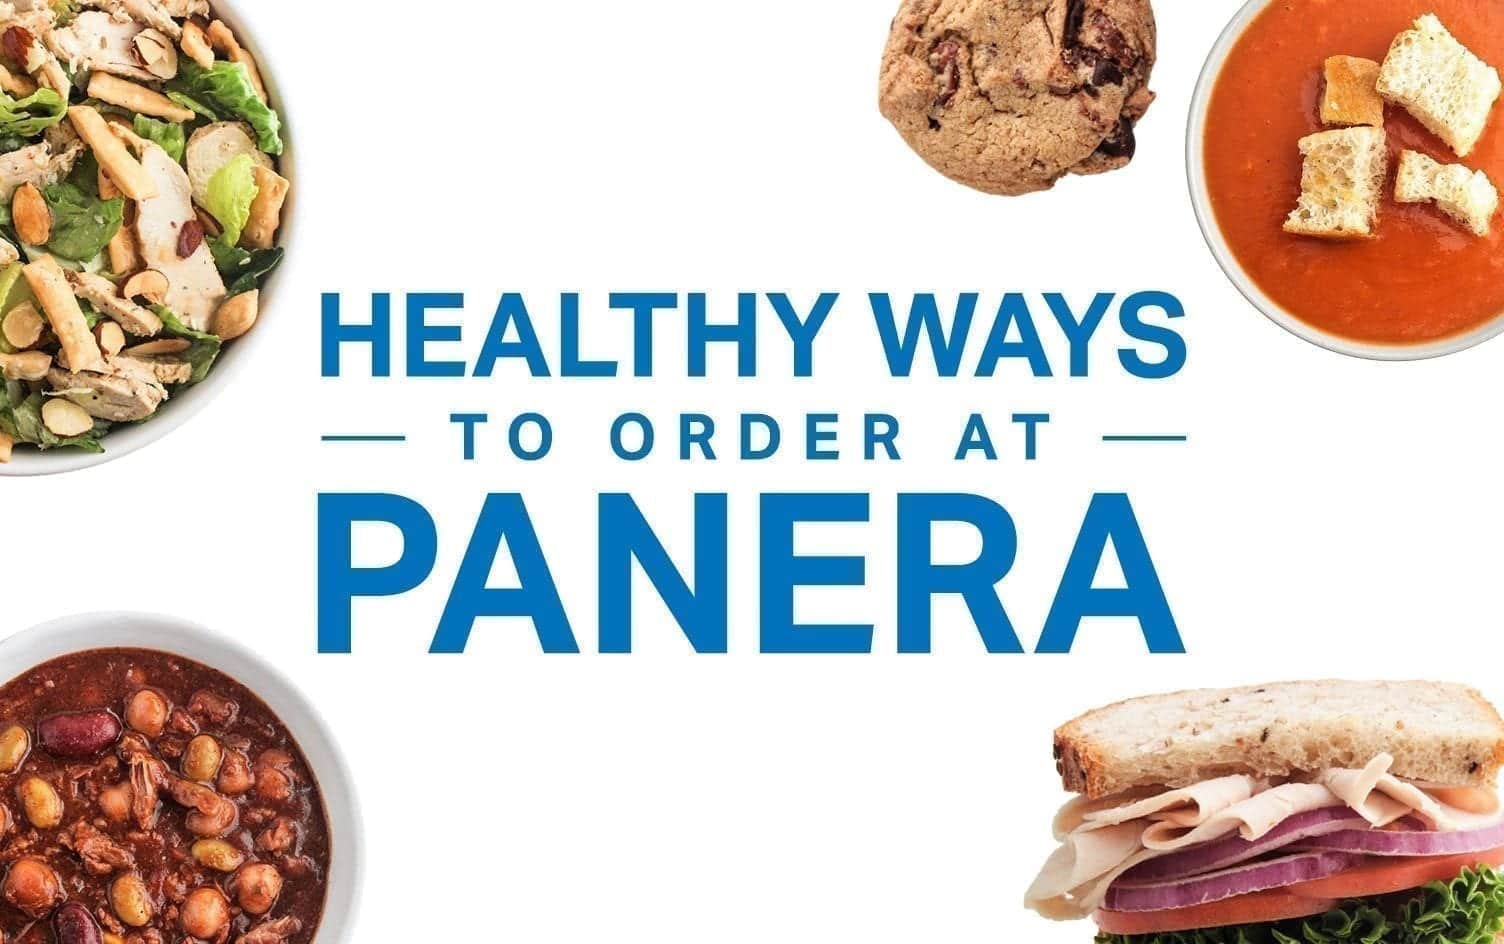 Healthy Eating At Panera: The Healthiest Panera Menu Options